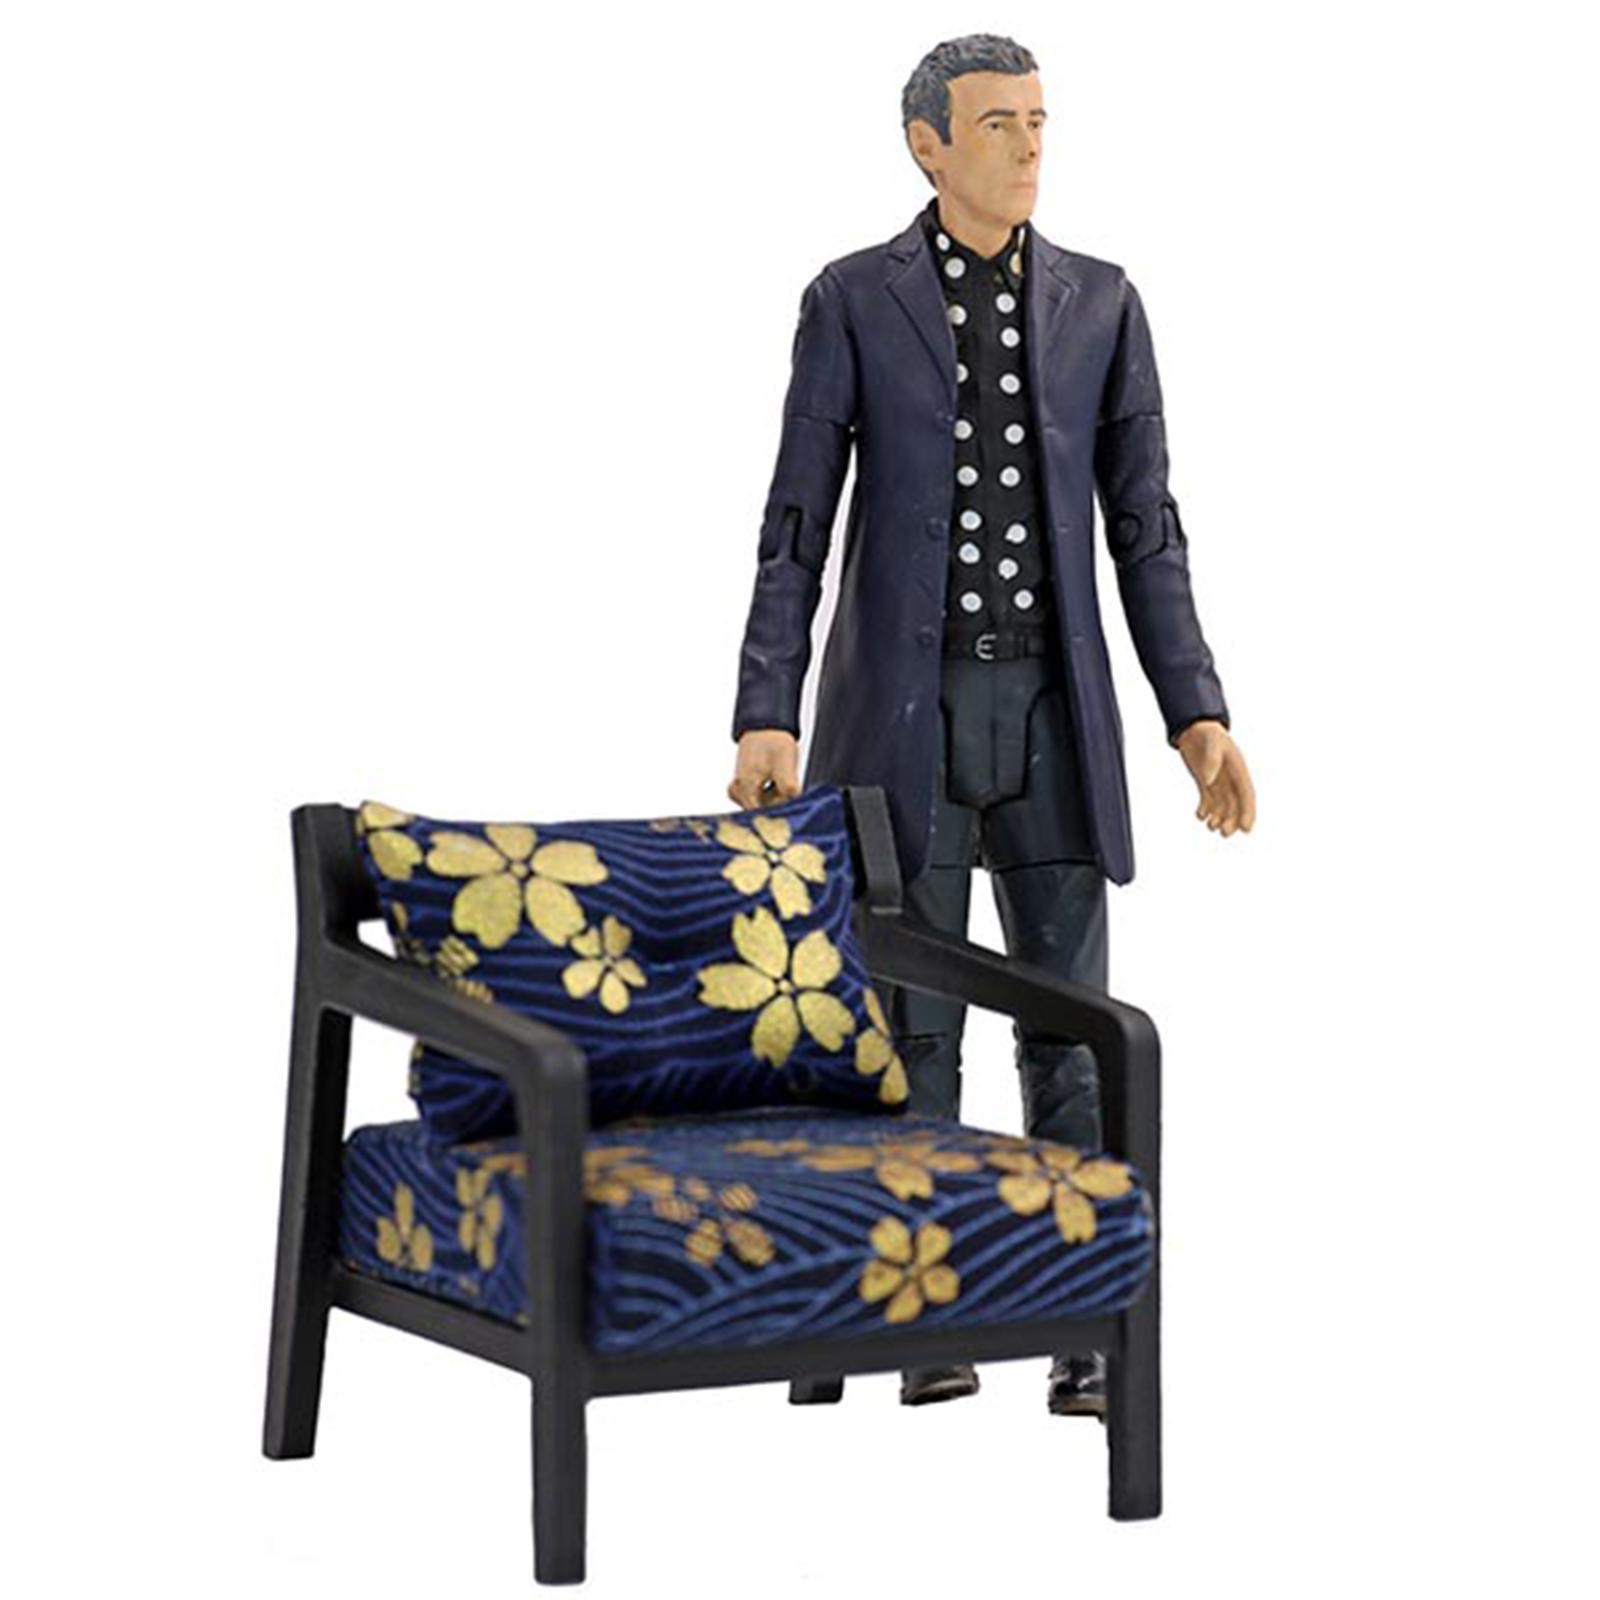 Dollhouse Accessories decor chair model  Black